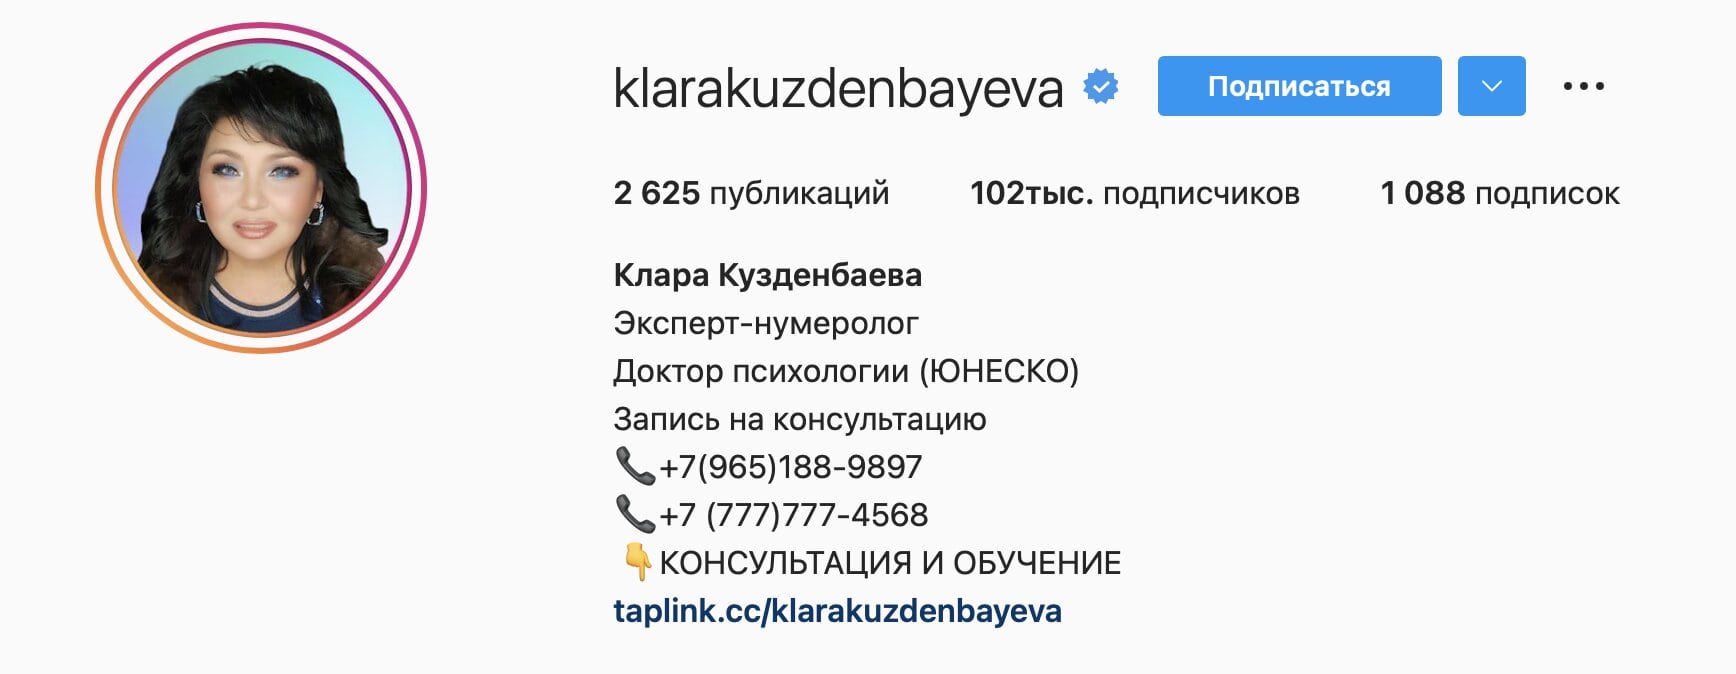 Клара Кузденбаева нумеролог инстаграм